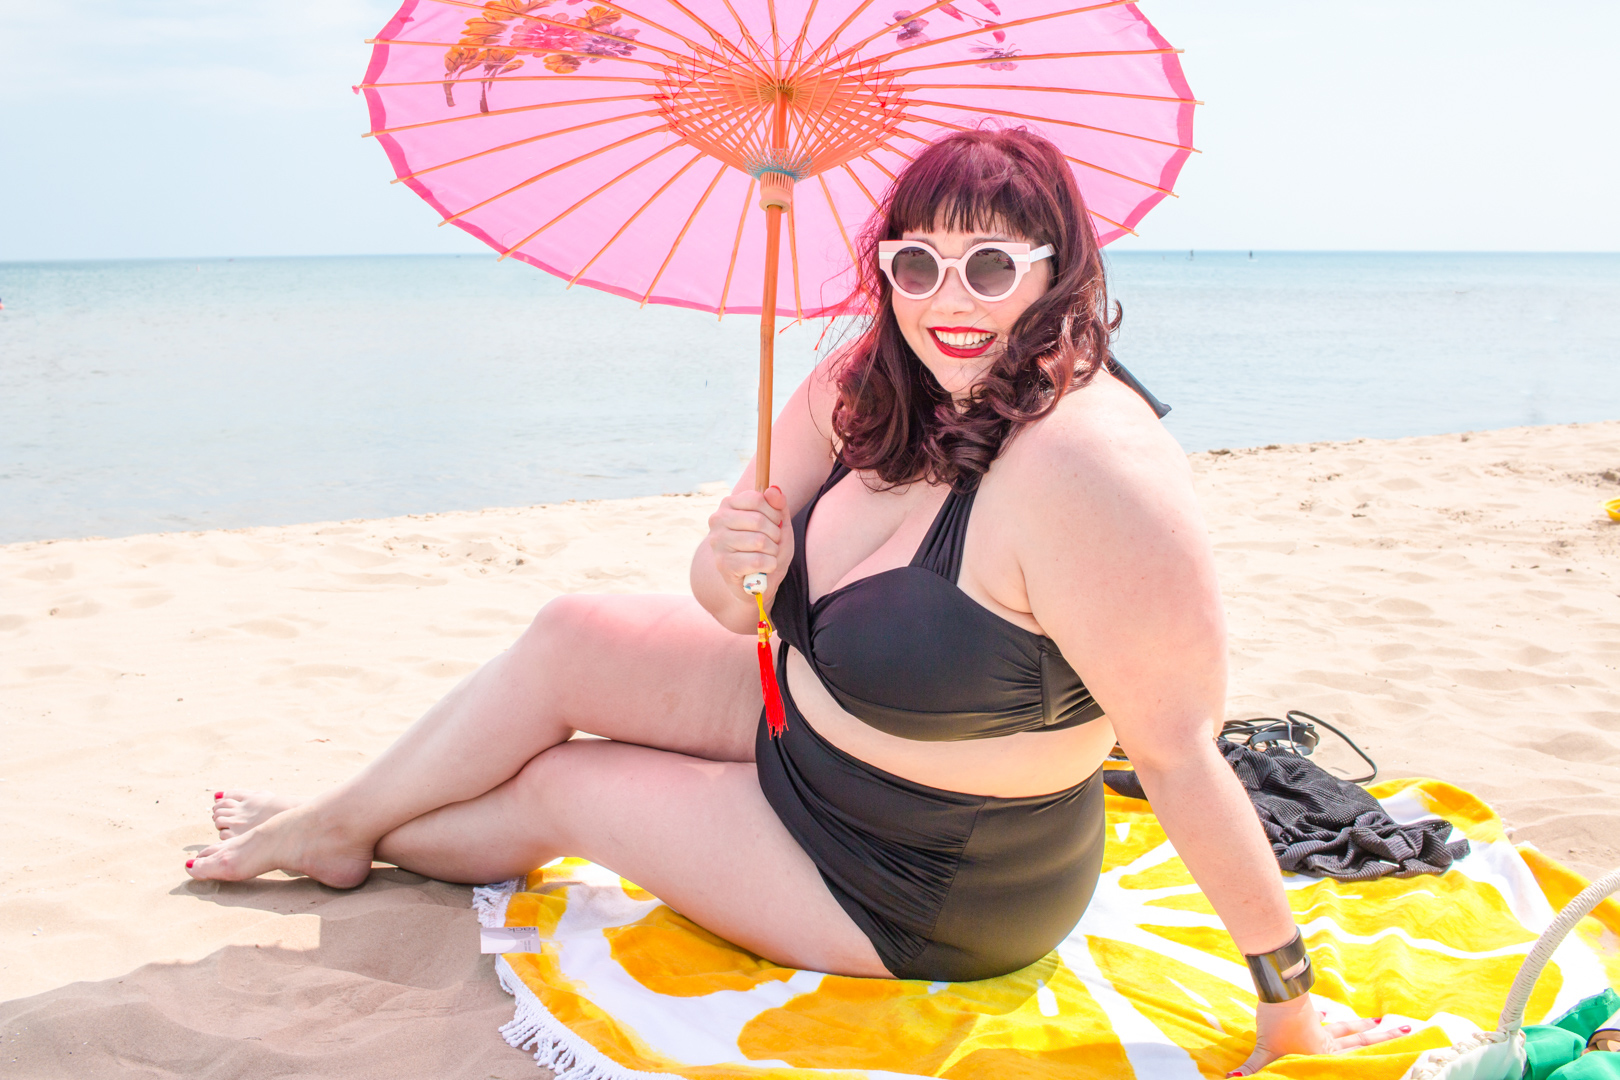 plus size blogger, plus size bikini, fatkini, Chicago beach, retro swimsuit